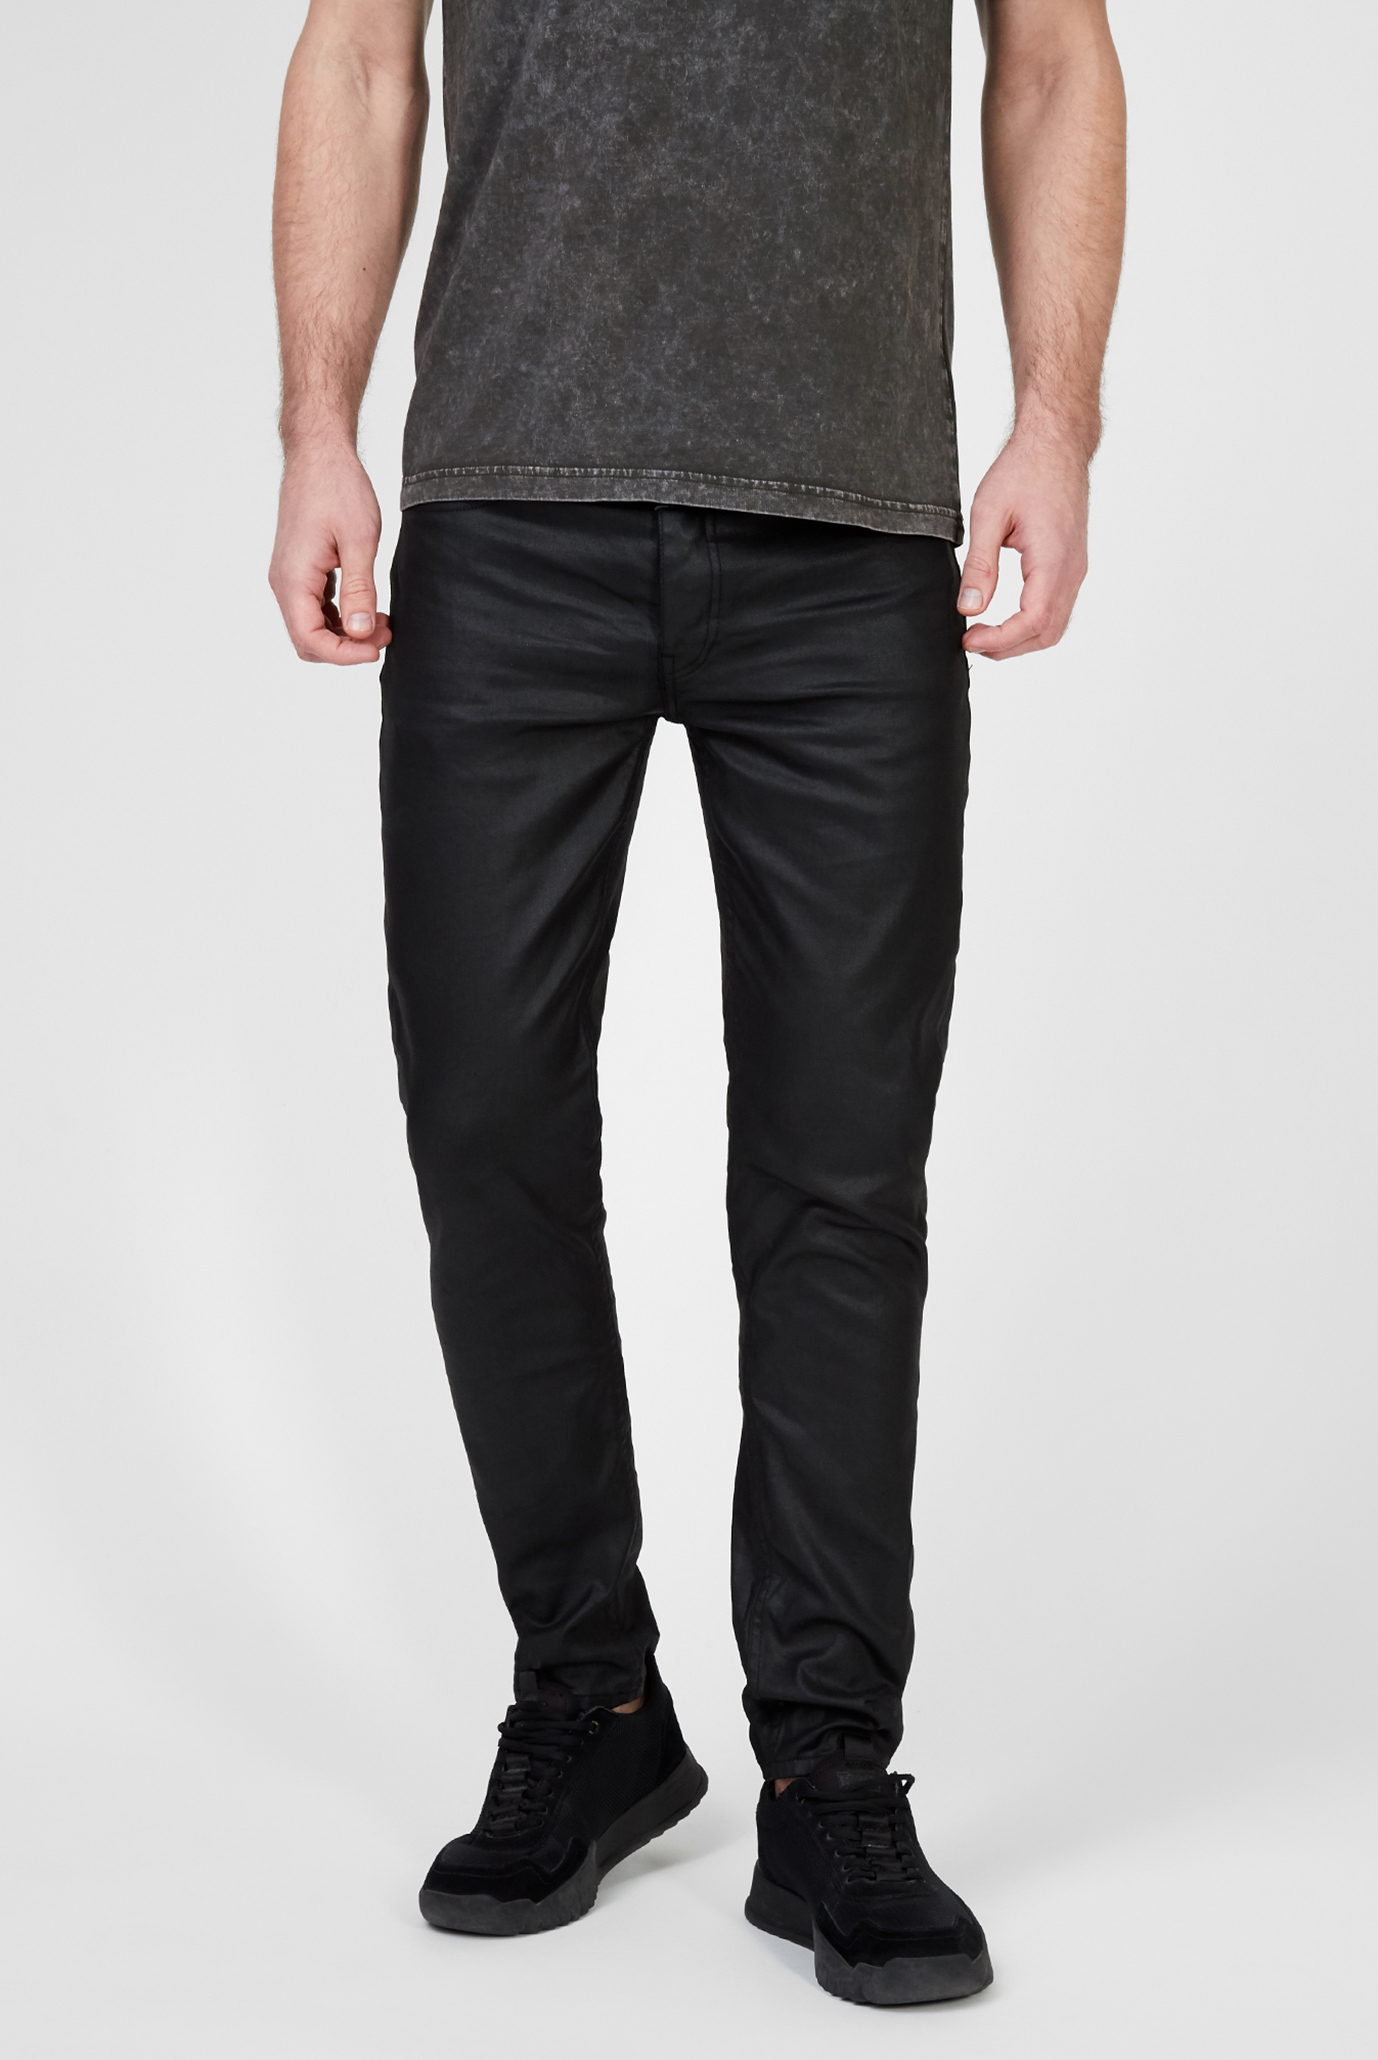 Чоловічі чорні джинси Morty 8691 coated 1